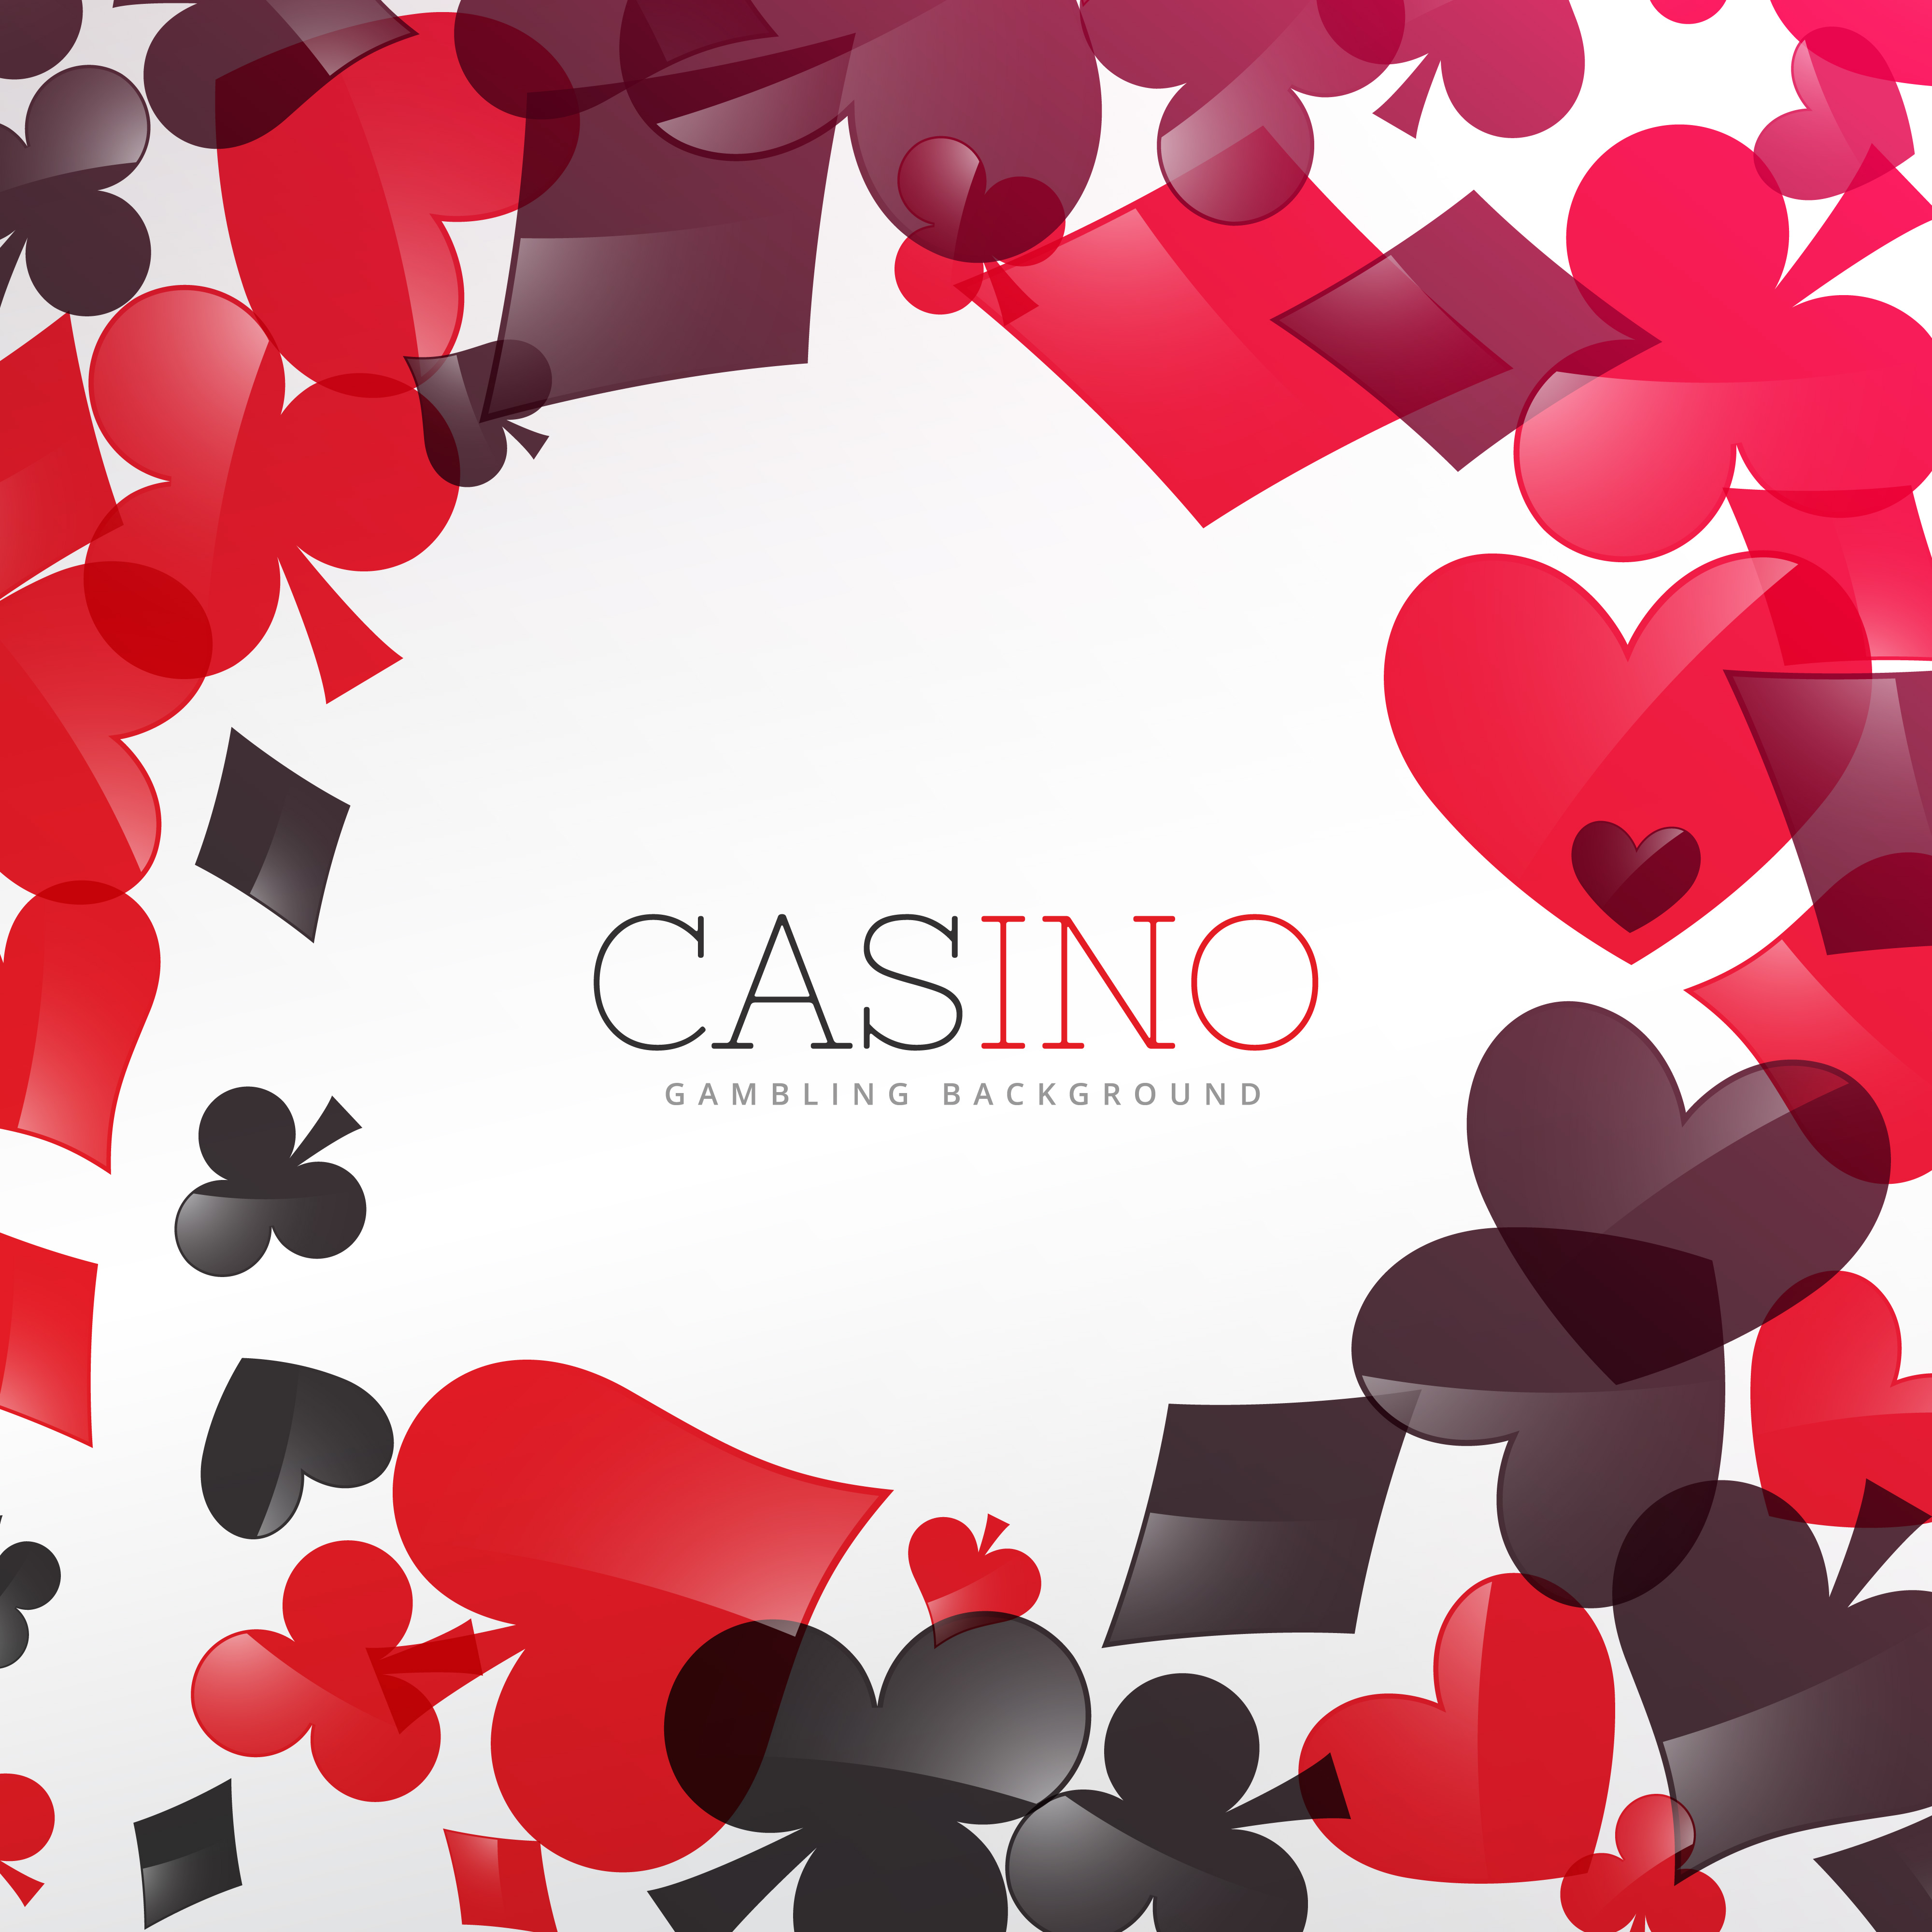 Gsn casino